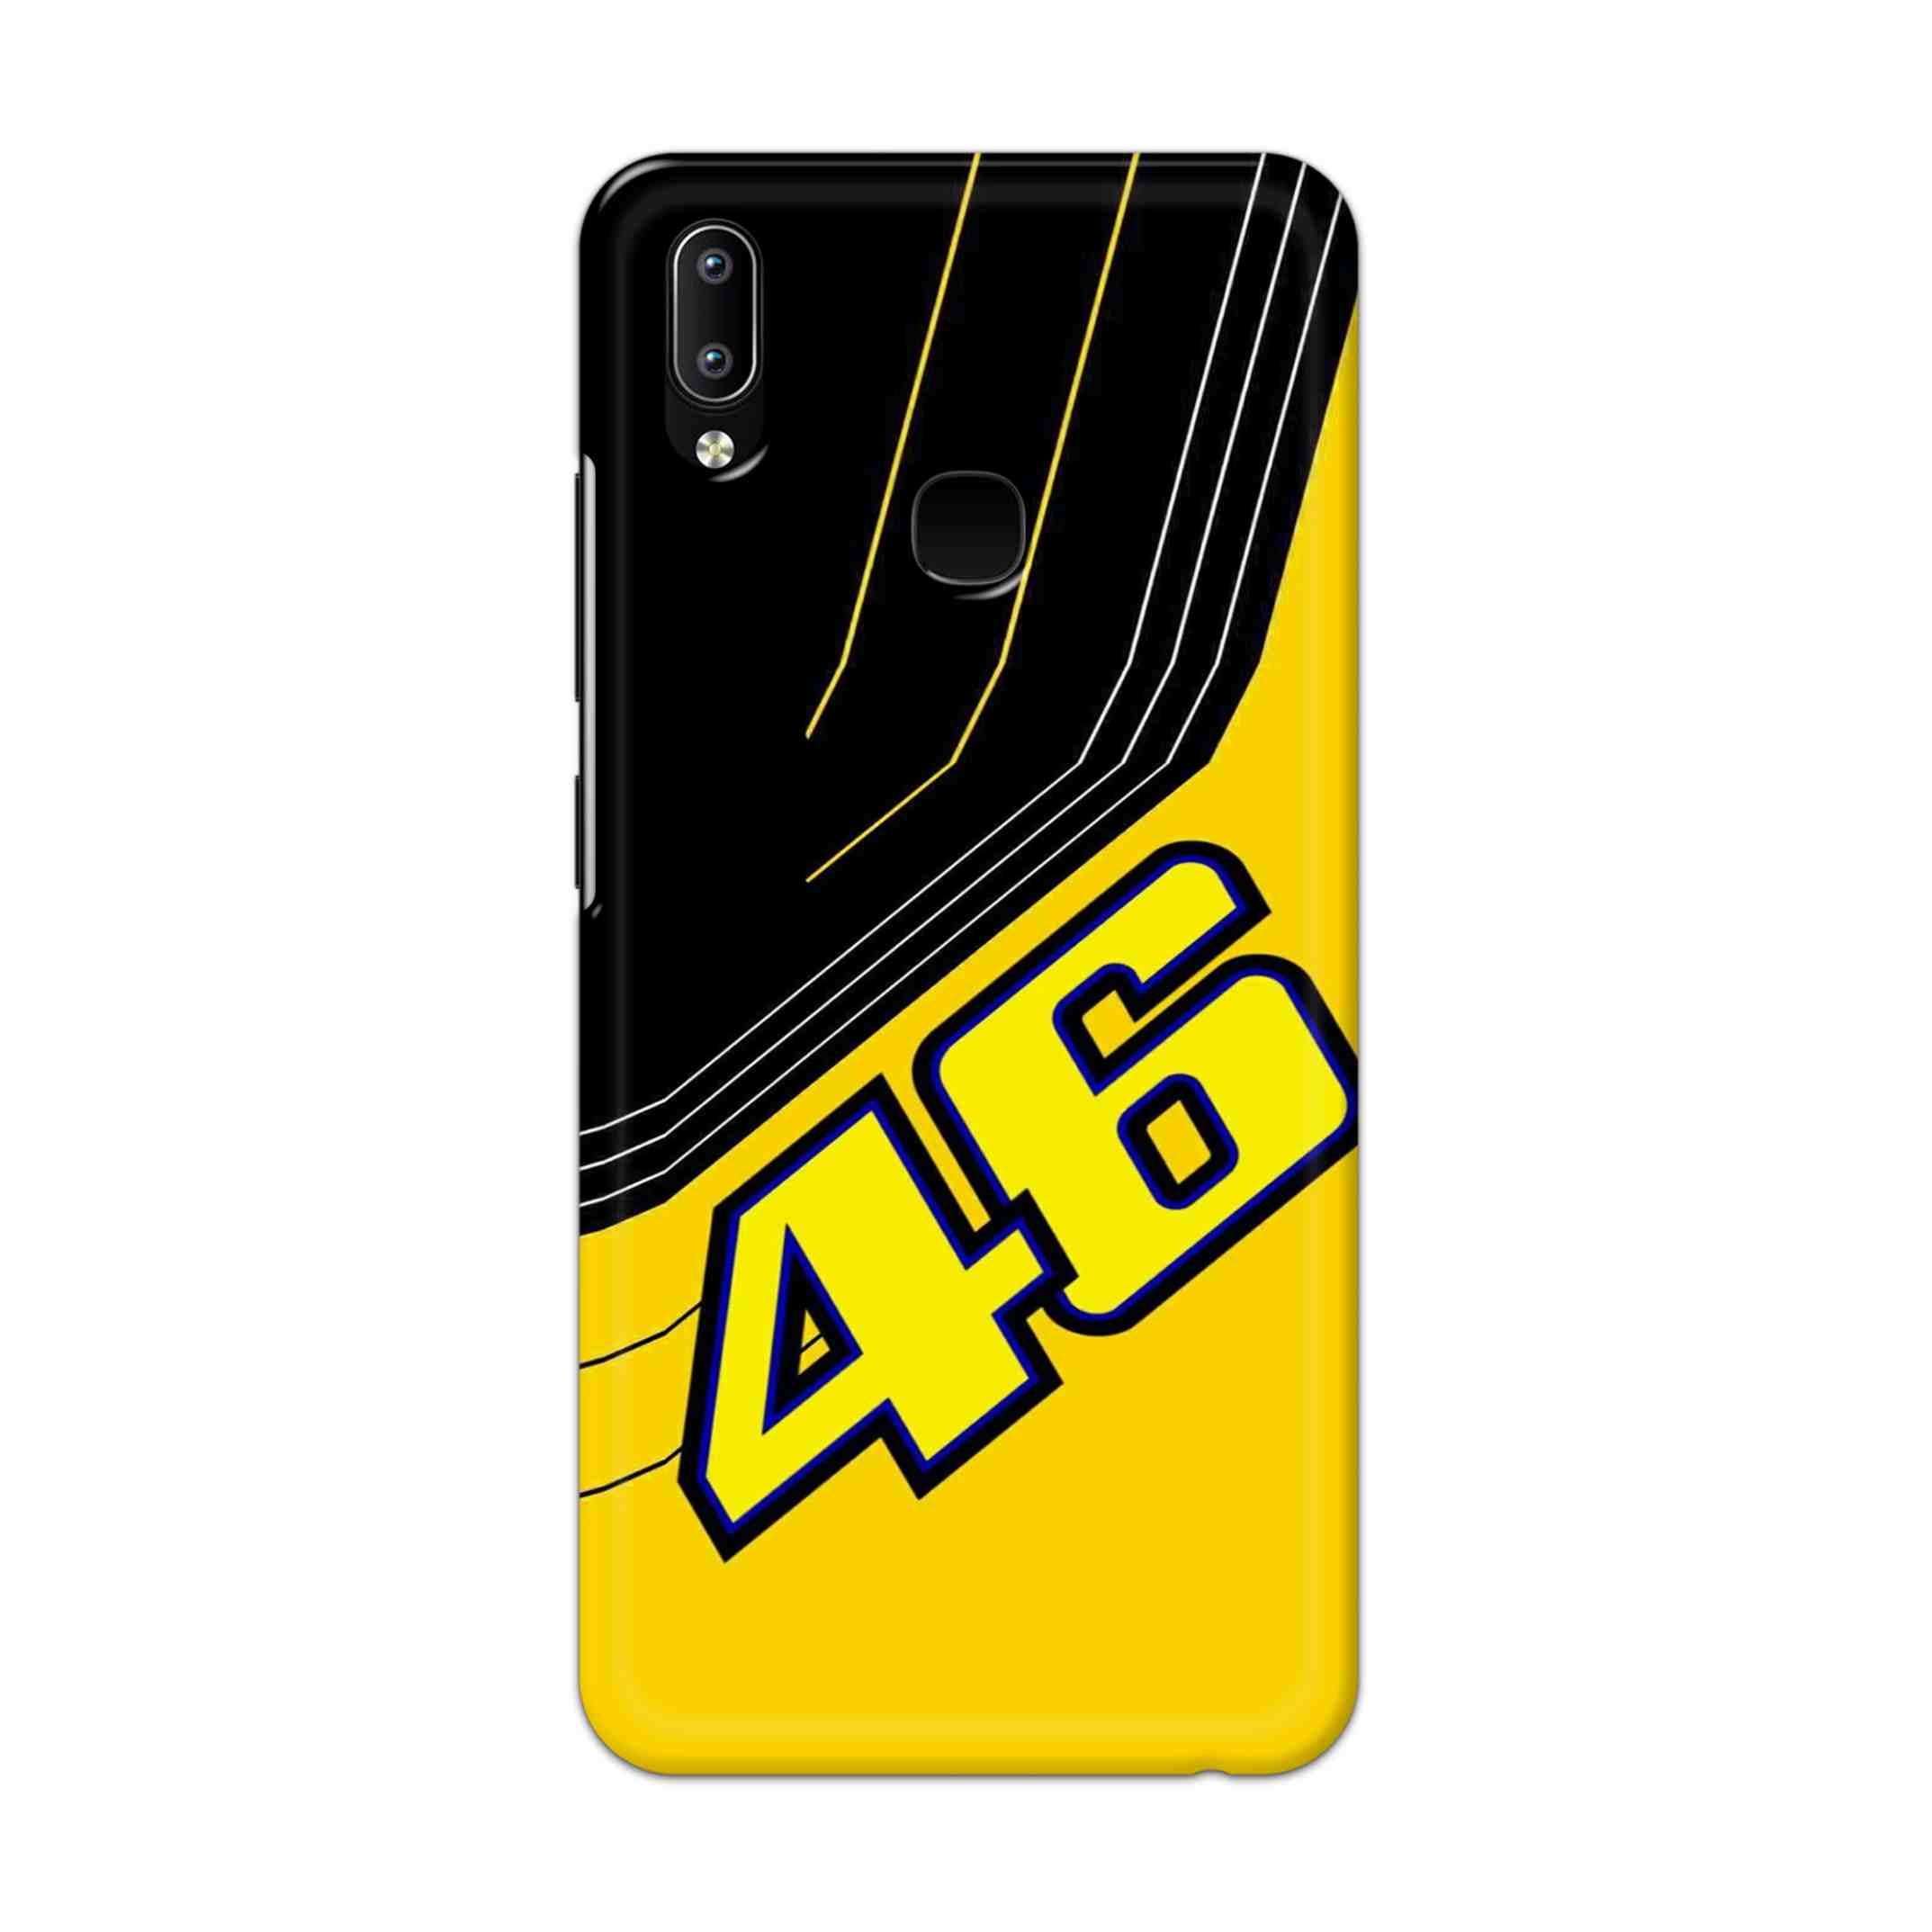 Buy 46 Hard Back Mobile Phone Case Cover For Vivo Y95 / Y93 / Y91 Online